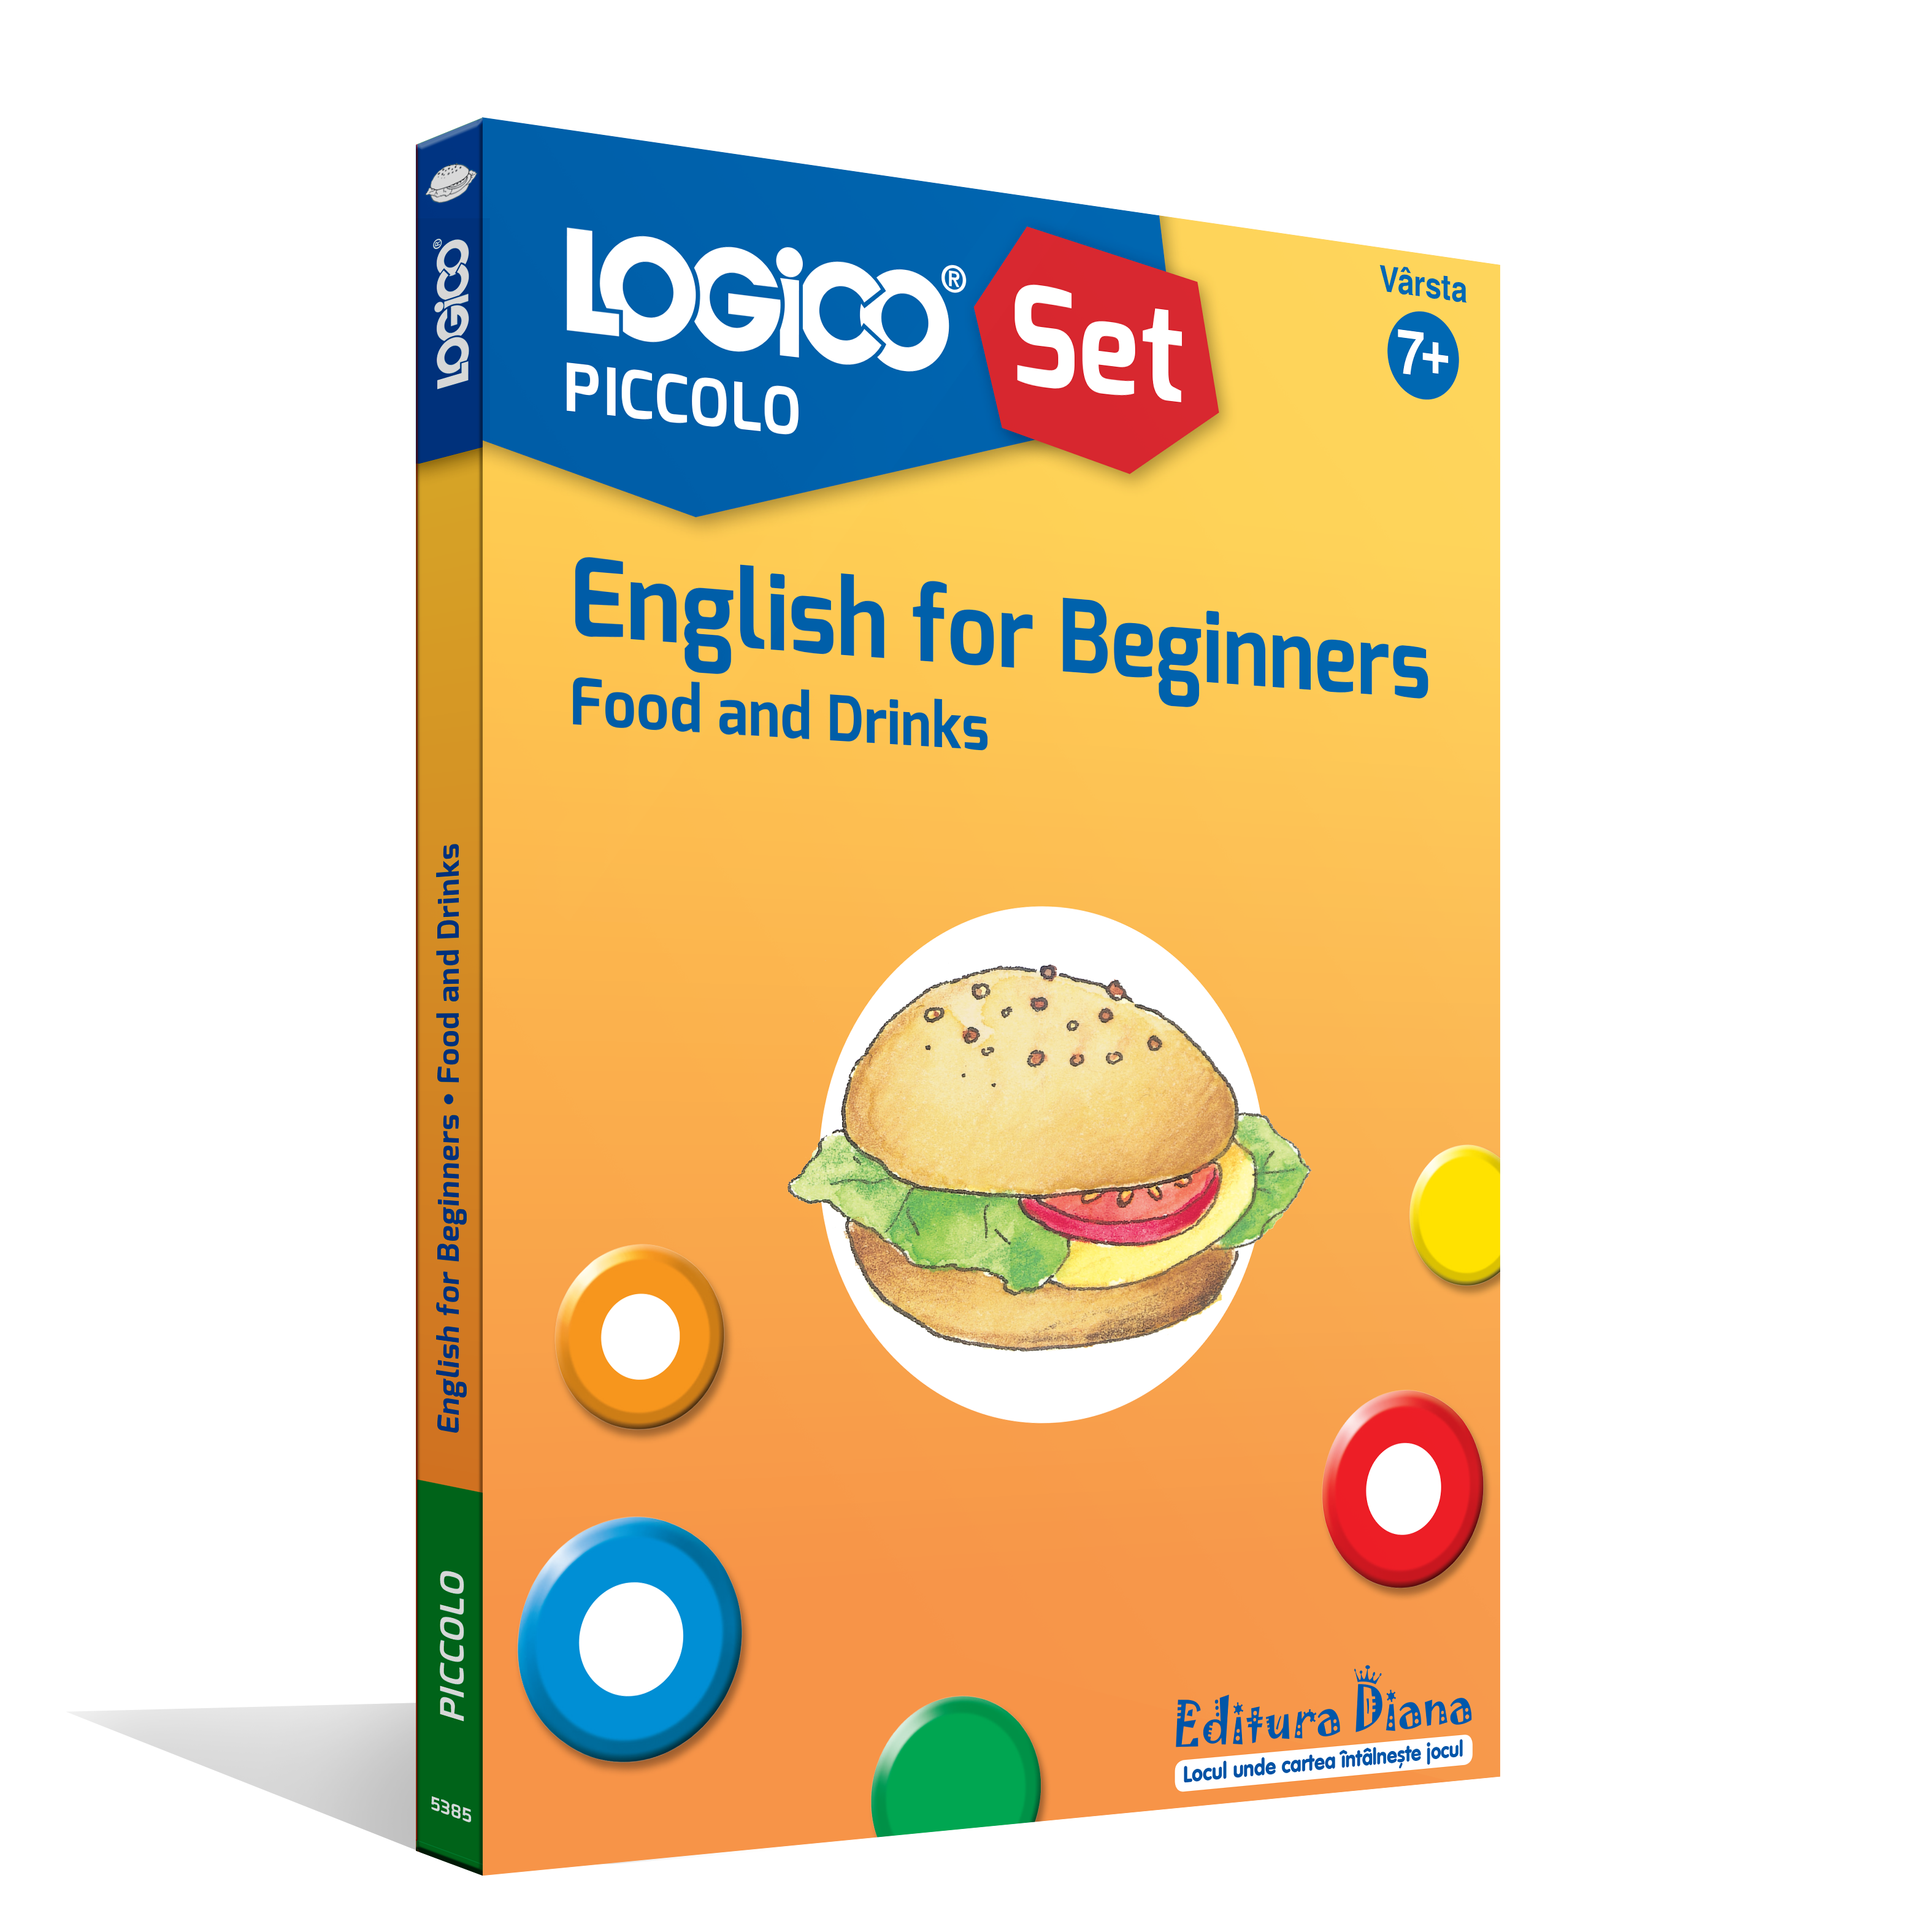 LOGICO PICCOLO - English for Beginners (7+)